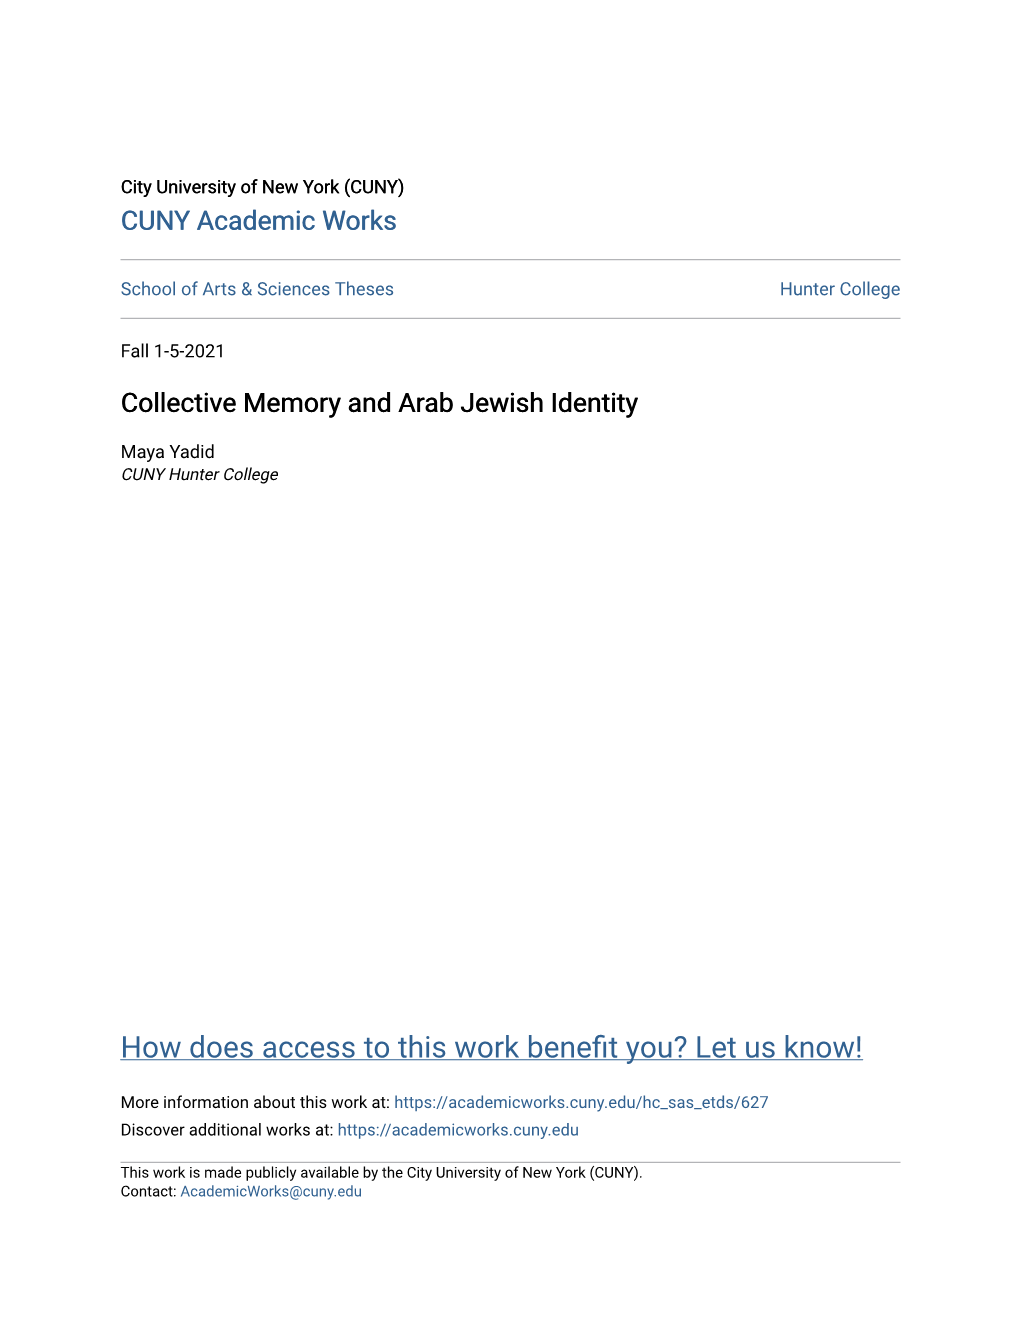 Collective Memory and Arab Jewish Identity